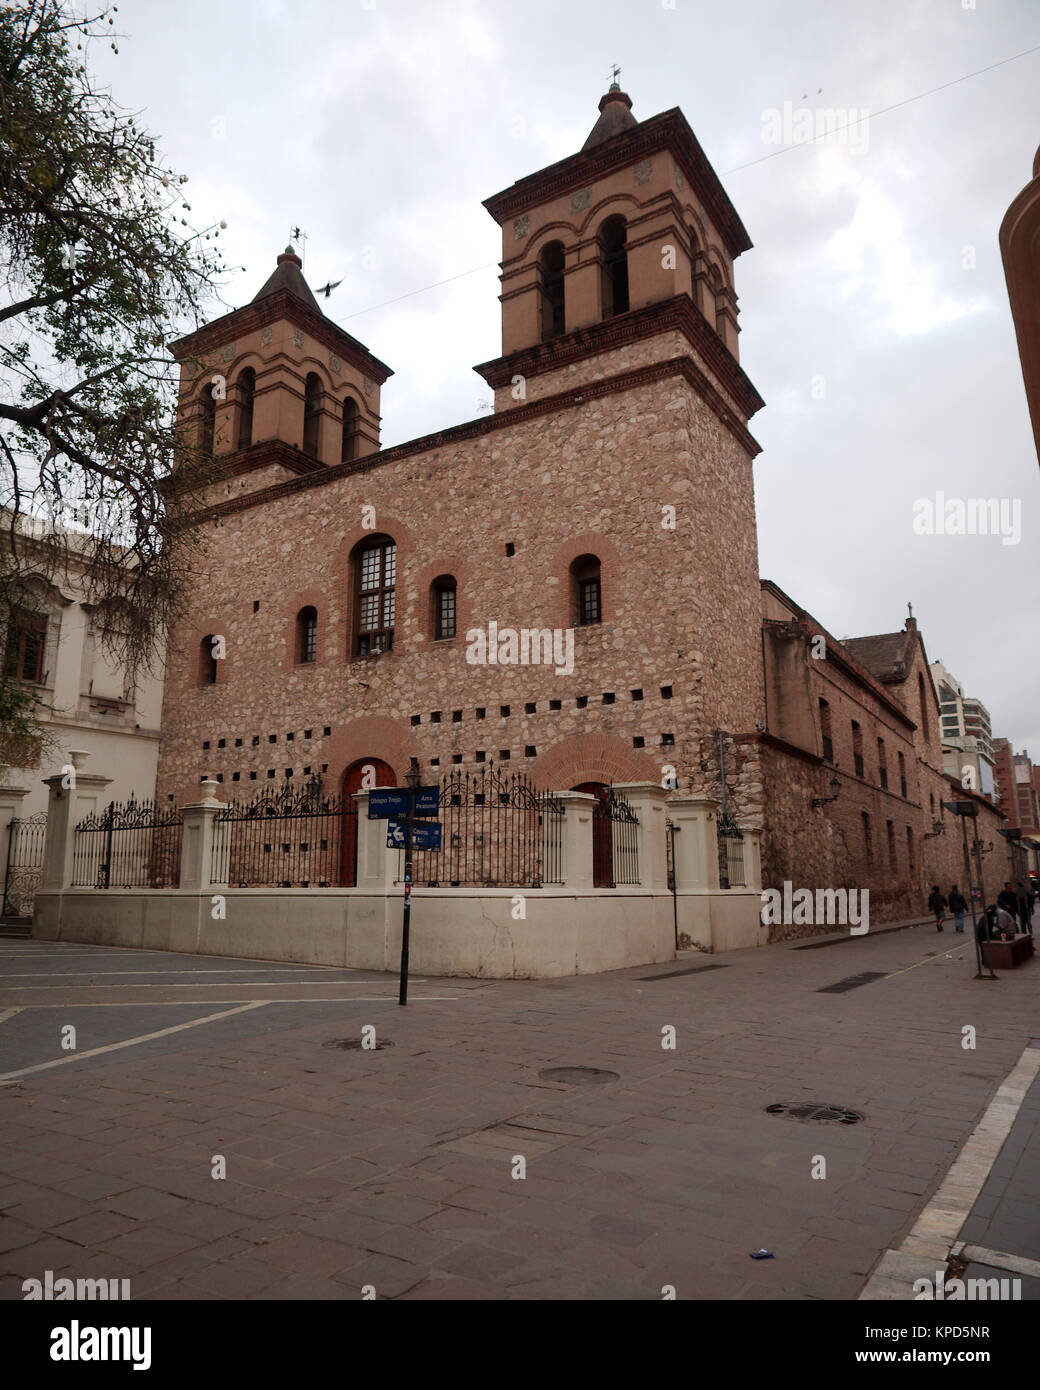 Cordoba, Argentina - 2017: The Society of Jesus Church is located at the Manzana Jesuitica (Jesuit block), a UNESCO Heritage Site. Stock Photo